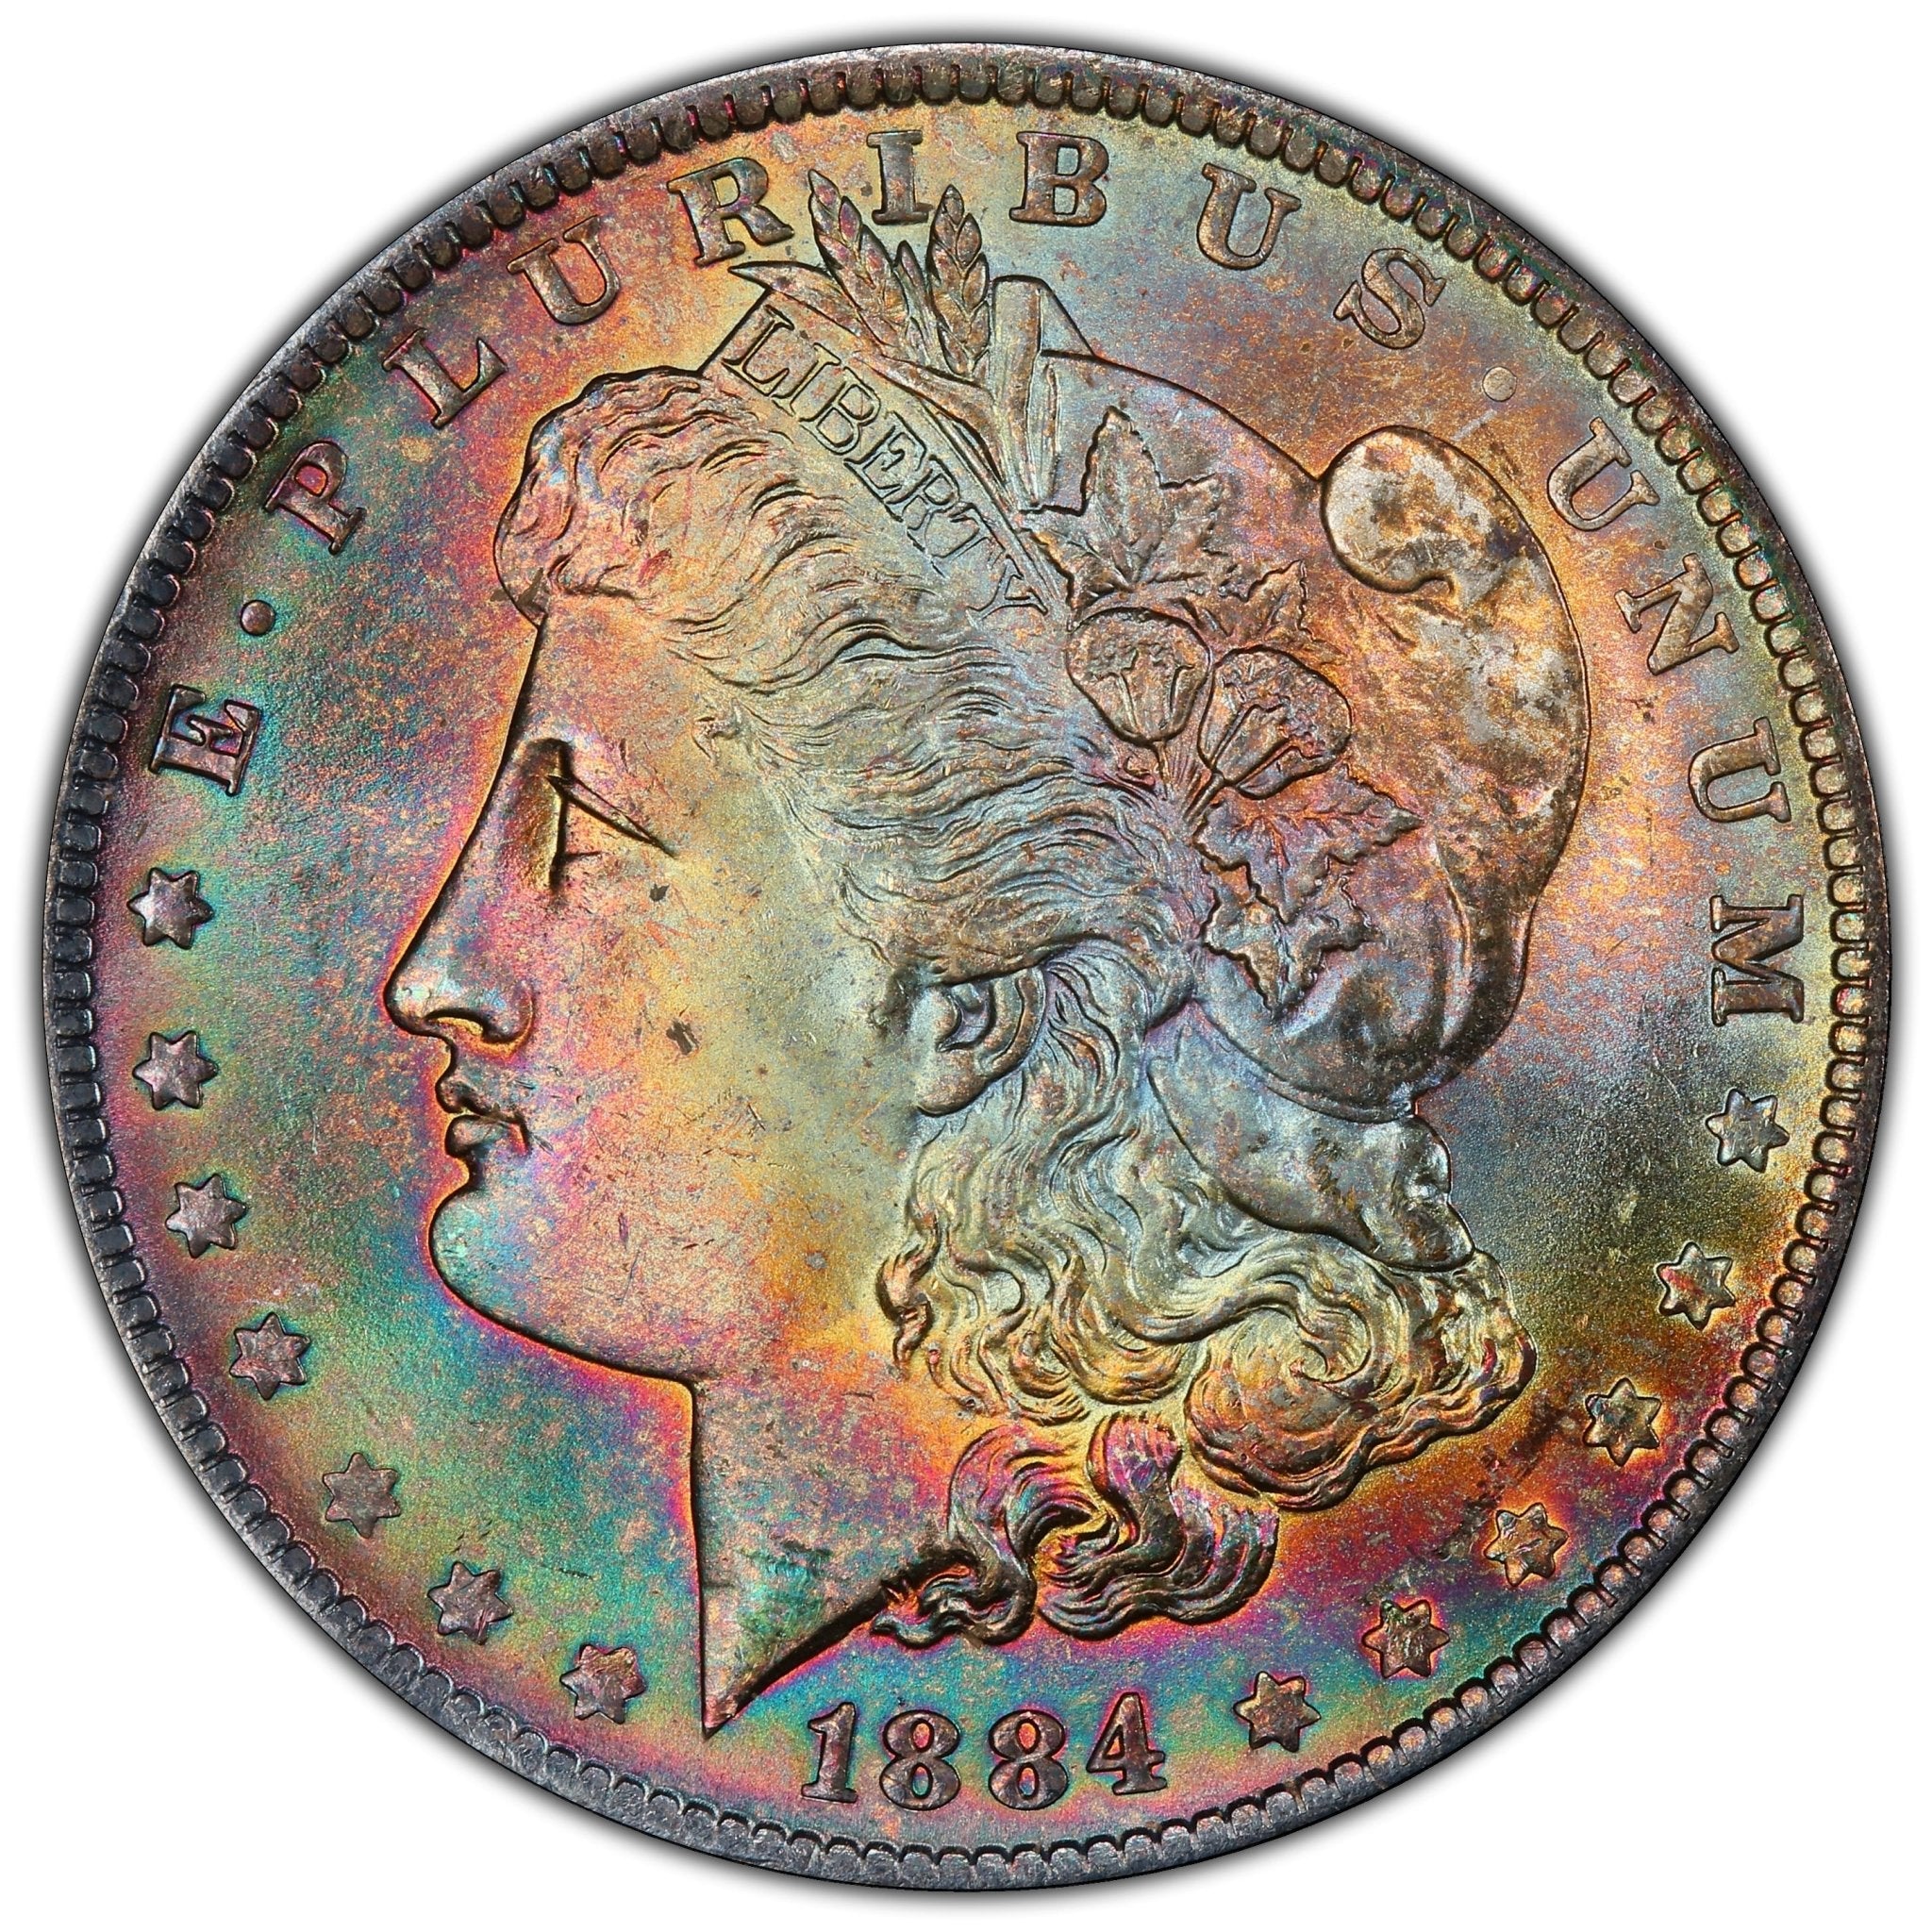 1884-O $1 MS67 PCGS - Paradime Coins | PCGS NGC CACG CAC Rare US Numismatic Coins For Sale